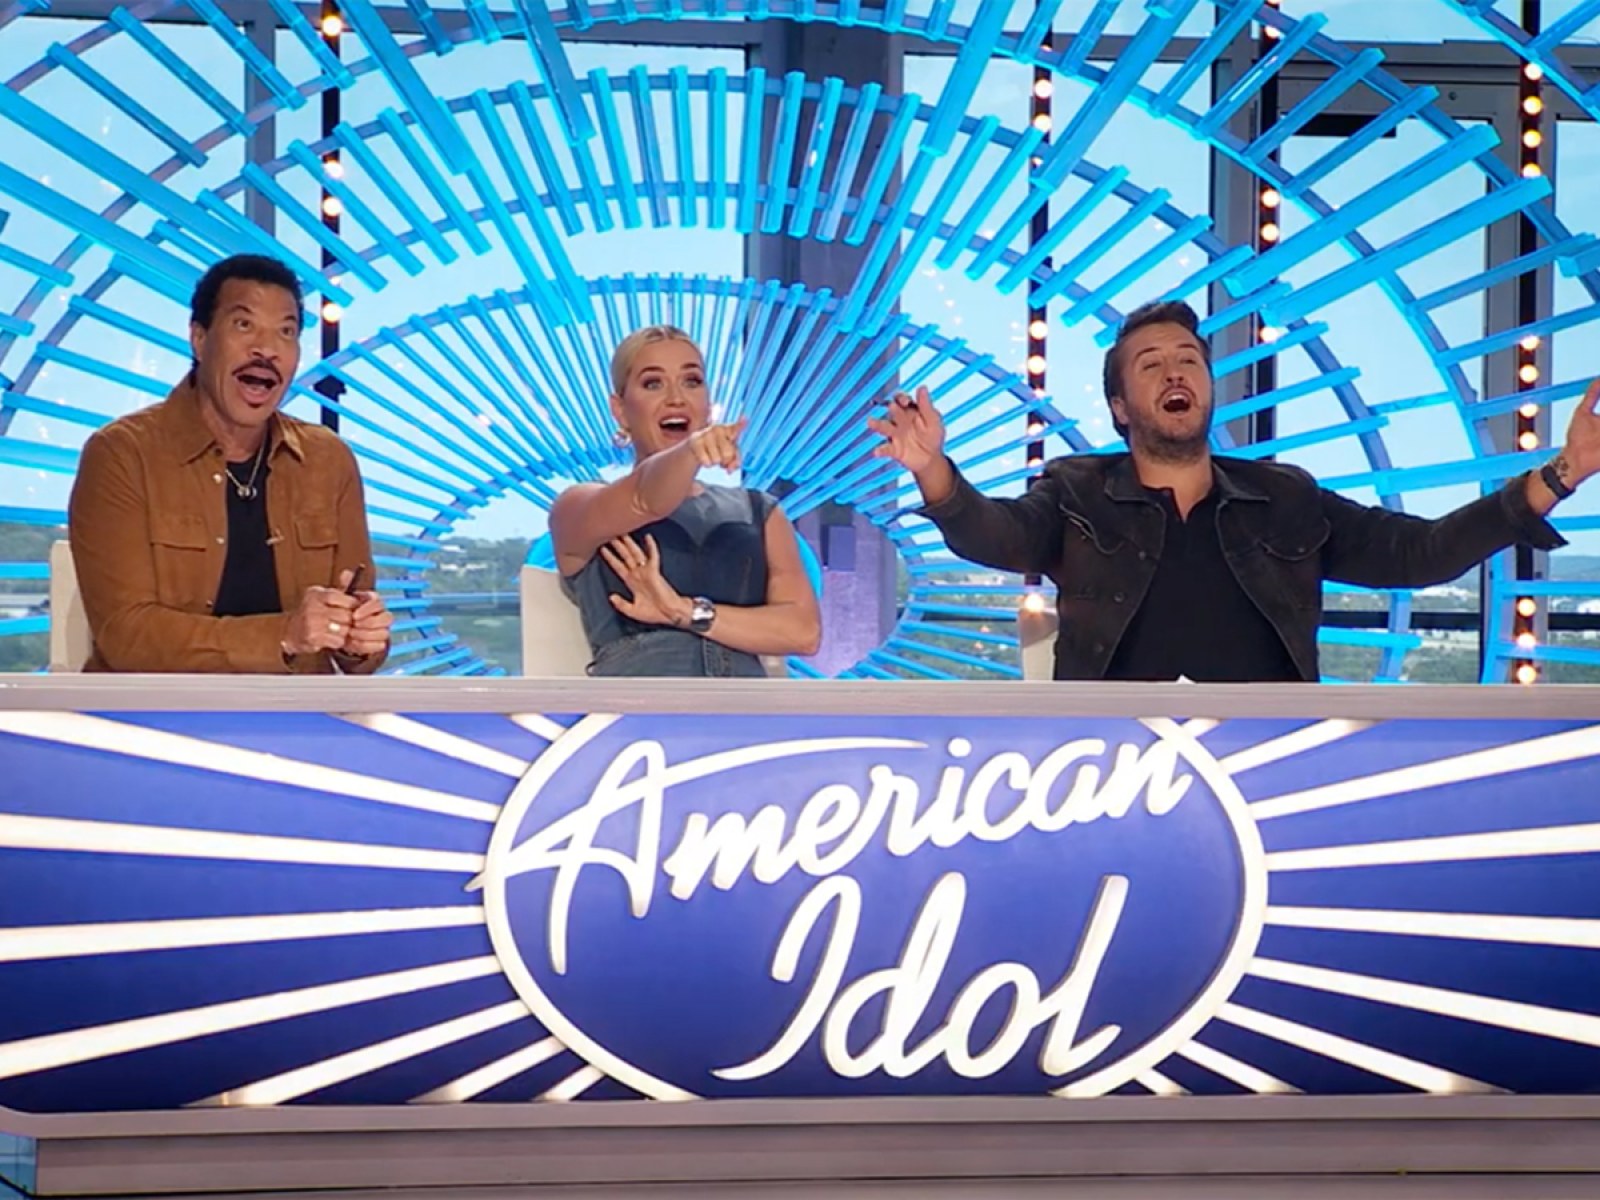 Indian Idol - American Idol